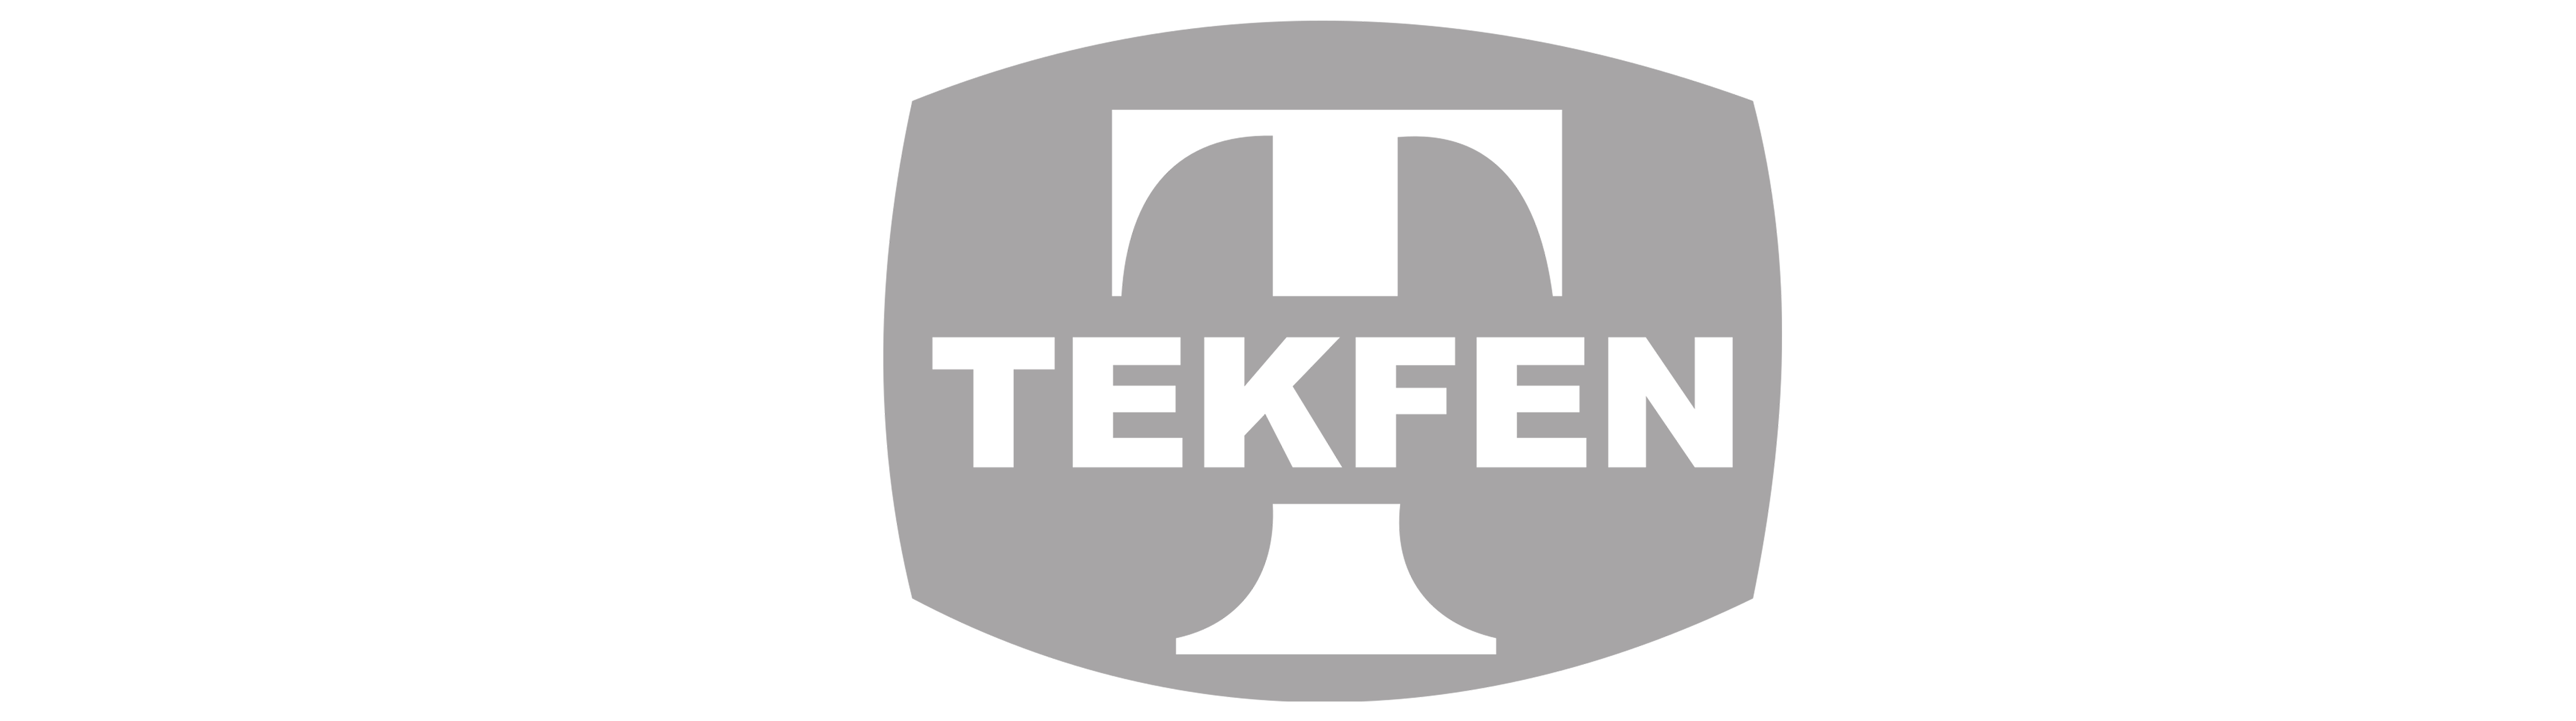 TKFEN - Tekfen Holding